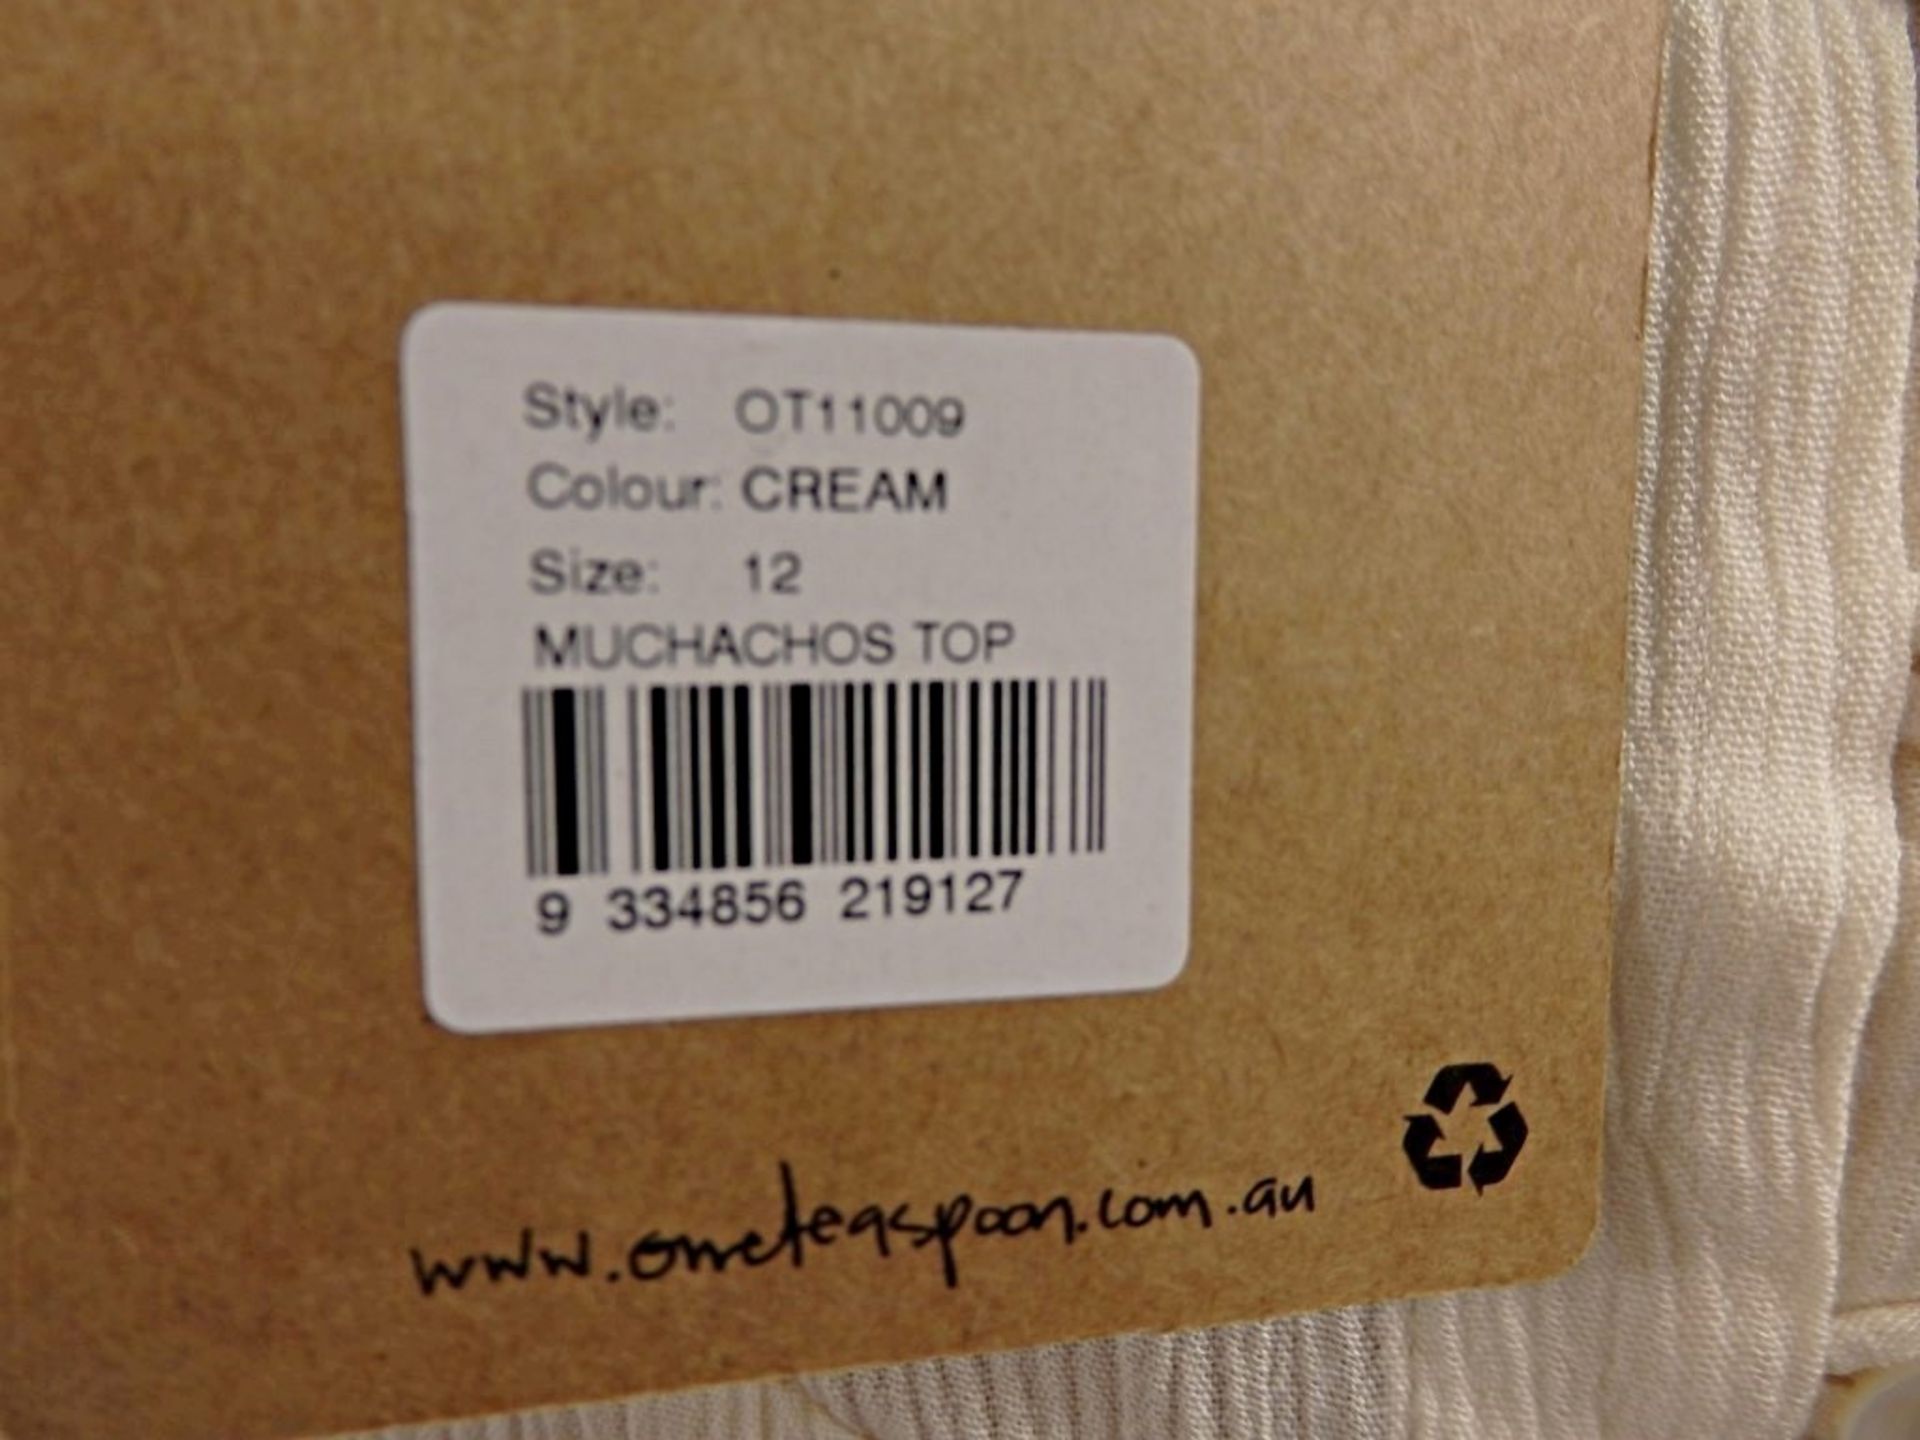 1 x One Teaspoon - Muchachos Cream Top - Size 12 - Style OT11009 - 100% Rayon - Beachwear - Ref: - Image 8 of 14